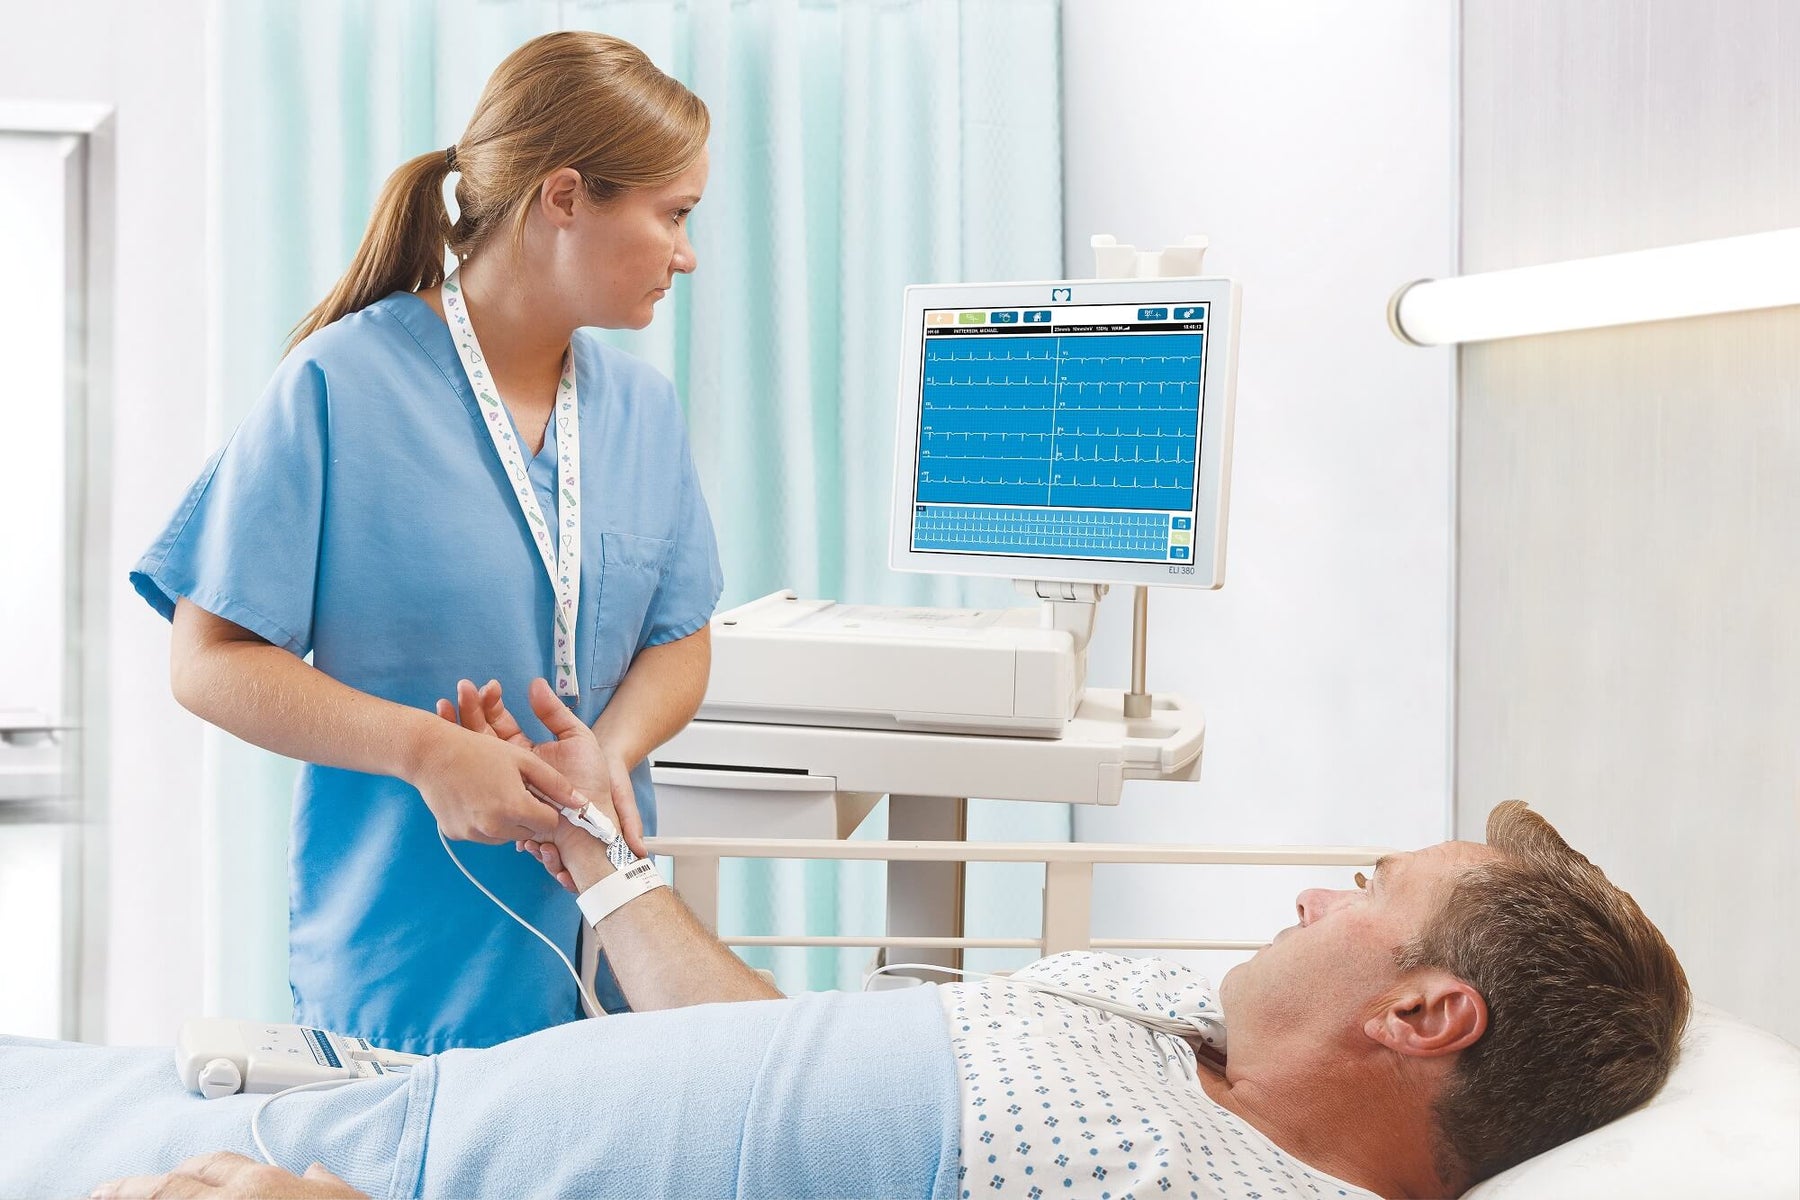 Diagnostics ECG - Buyers Guide: 5 Best Selling ECG Machines